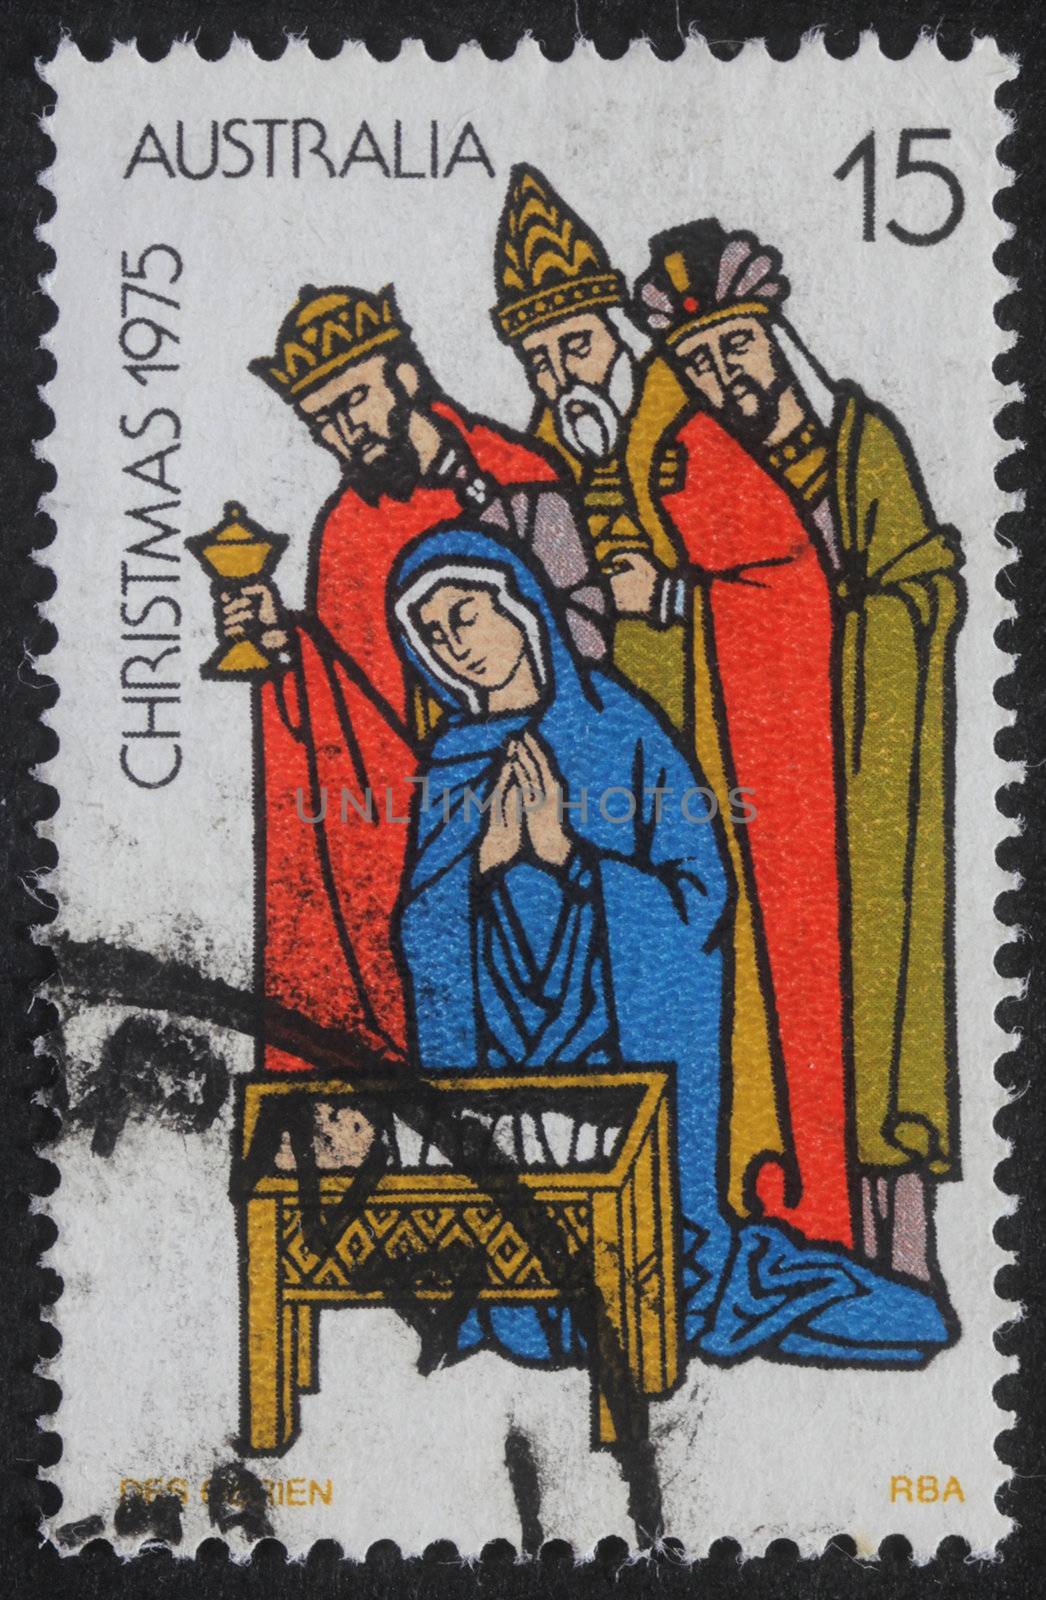 Birth of Jesus Christ, adoration of the Magi by atlas